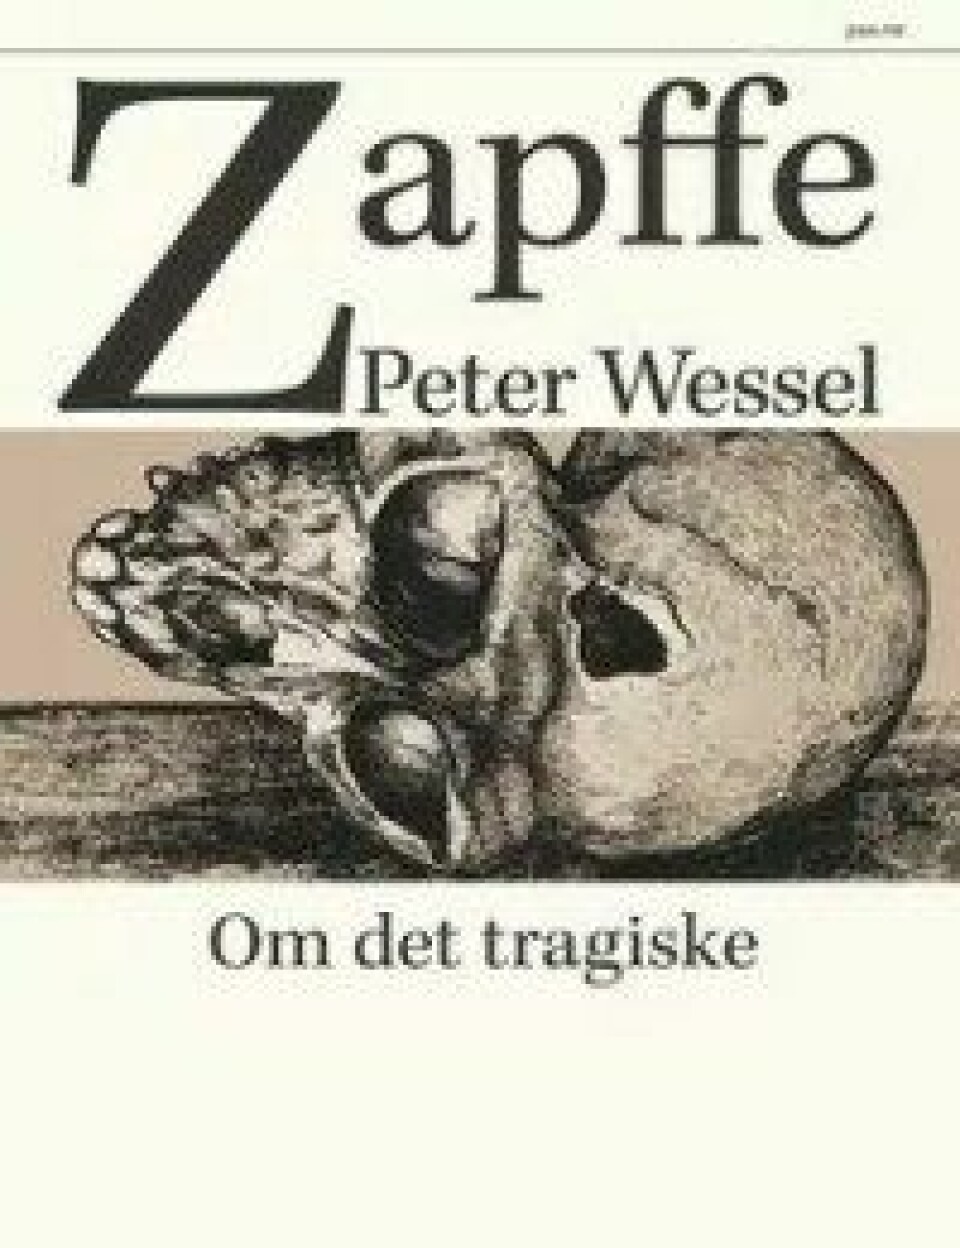 Om det tragiske (2015) av Peter Wessel Zapffe, Pax forlag, Oslo. (Kilde: Pax)